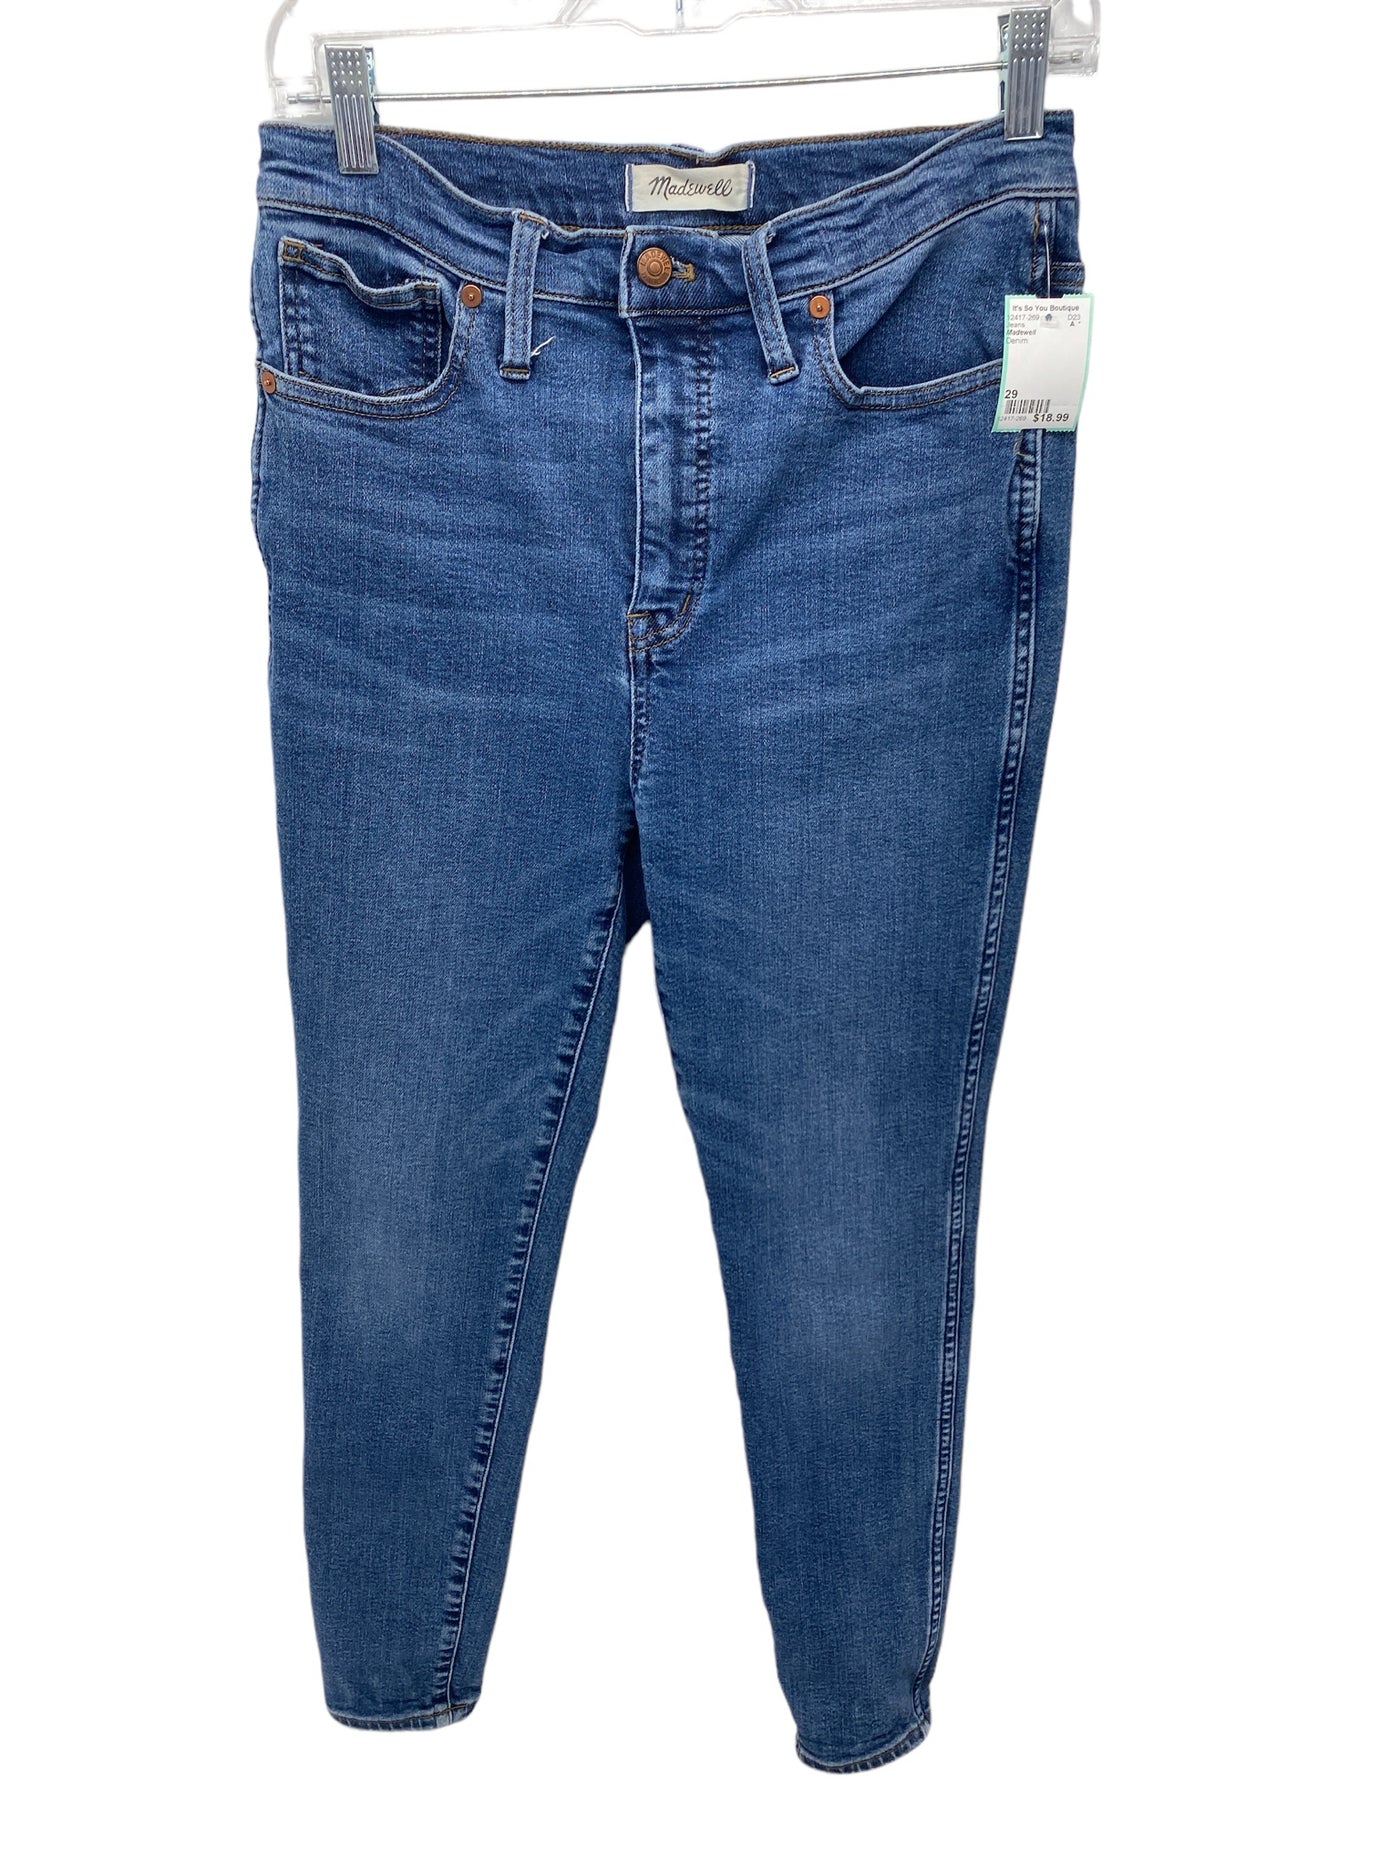 Madewell Misses Size 29 Denim Jeans